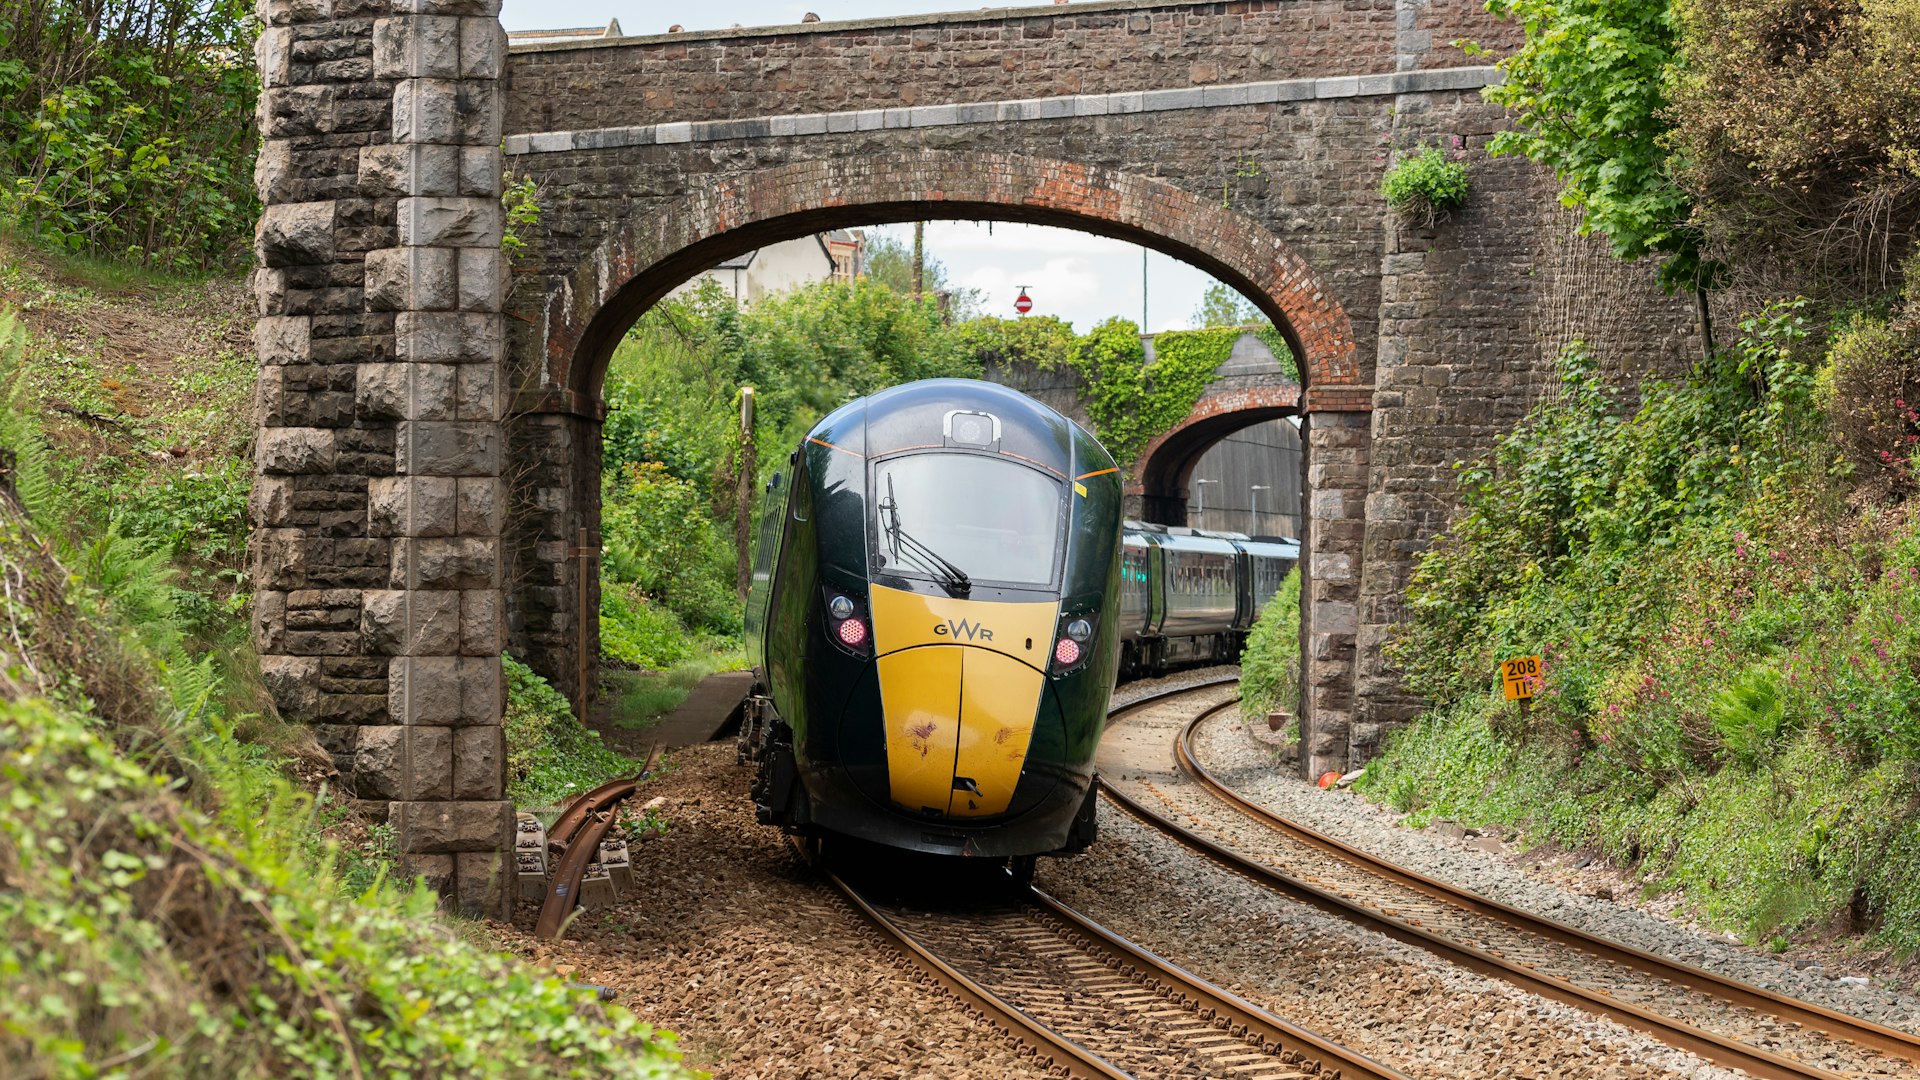 Great Western Railway train under a stone overpass at Teignmouth, Devon, England, UK